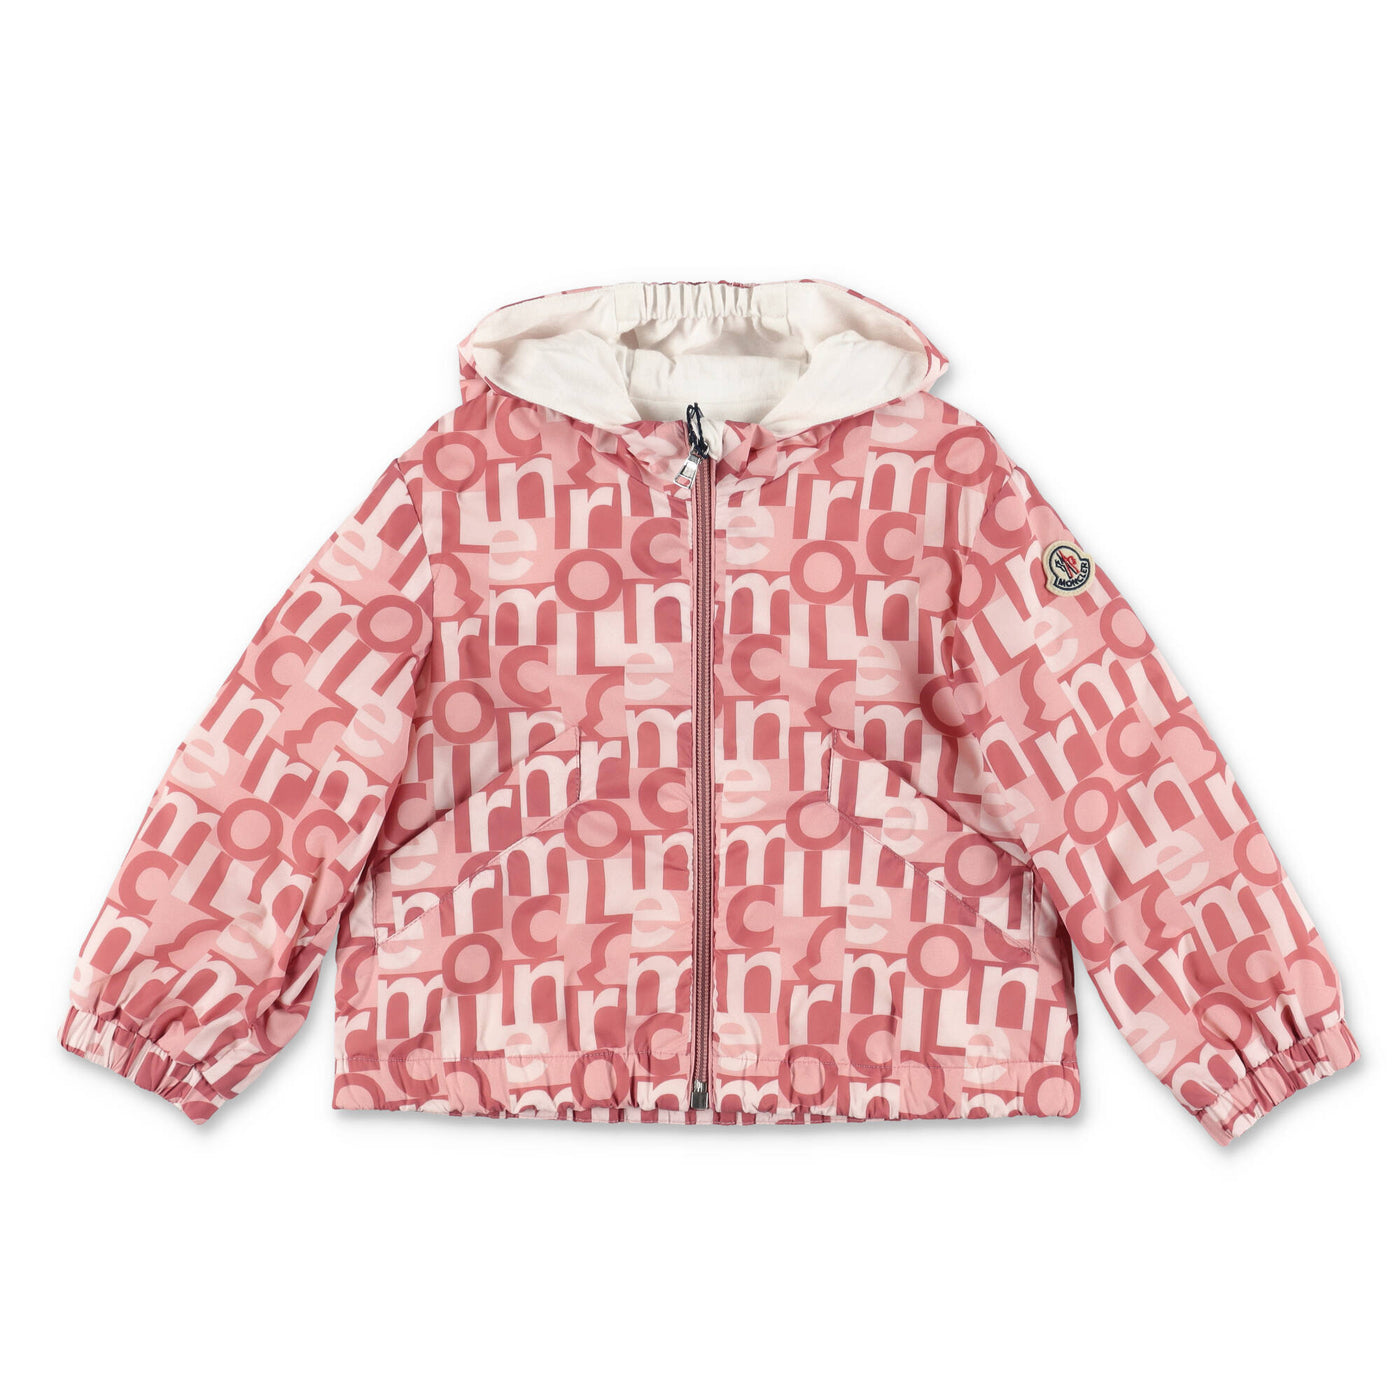 VERNANT pink logo nylon baby girl MONCLER hooded jacket